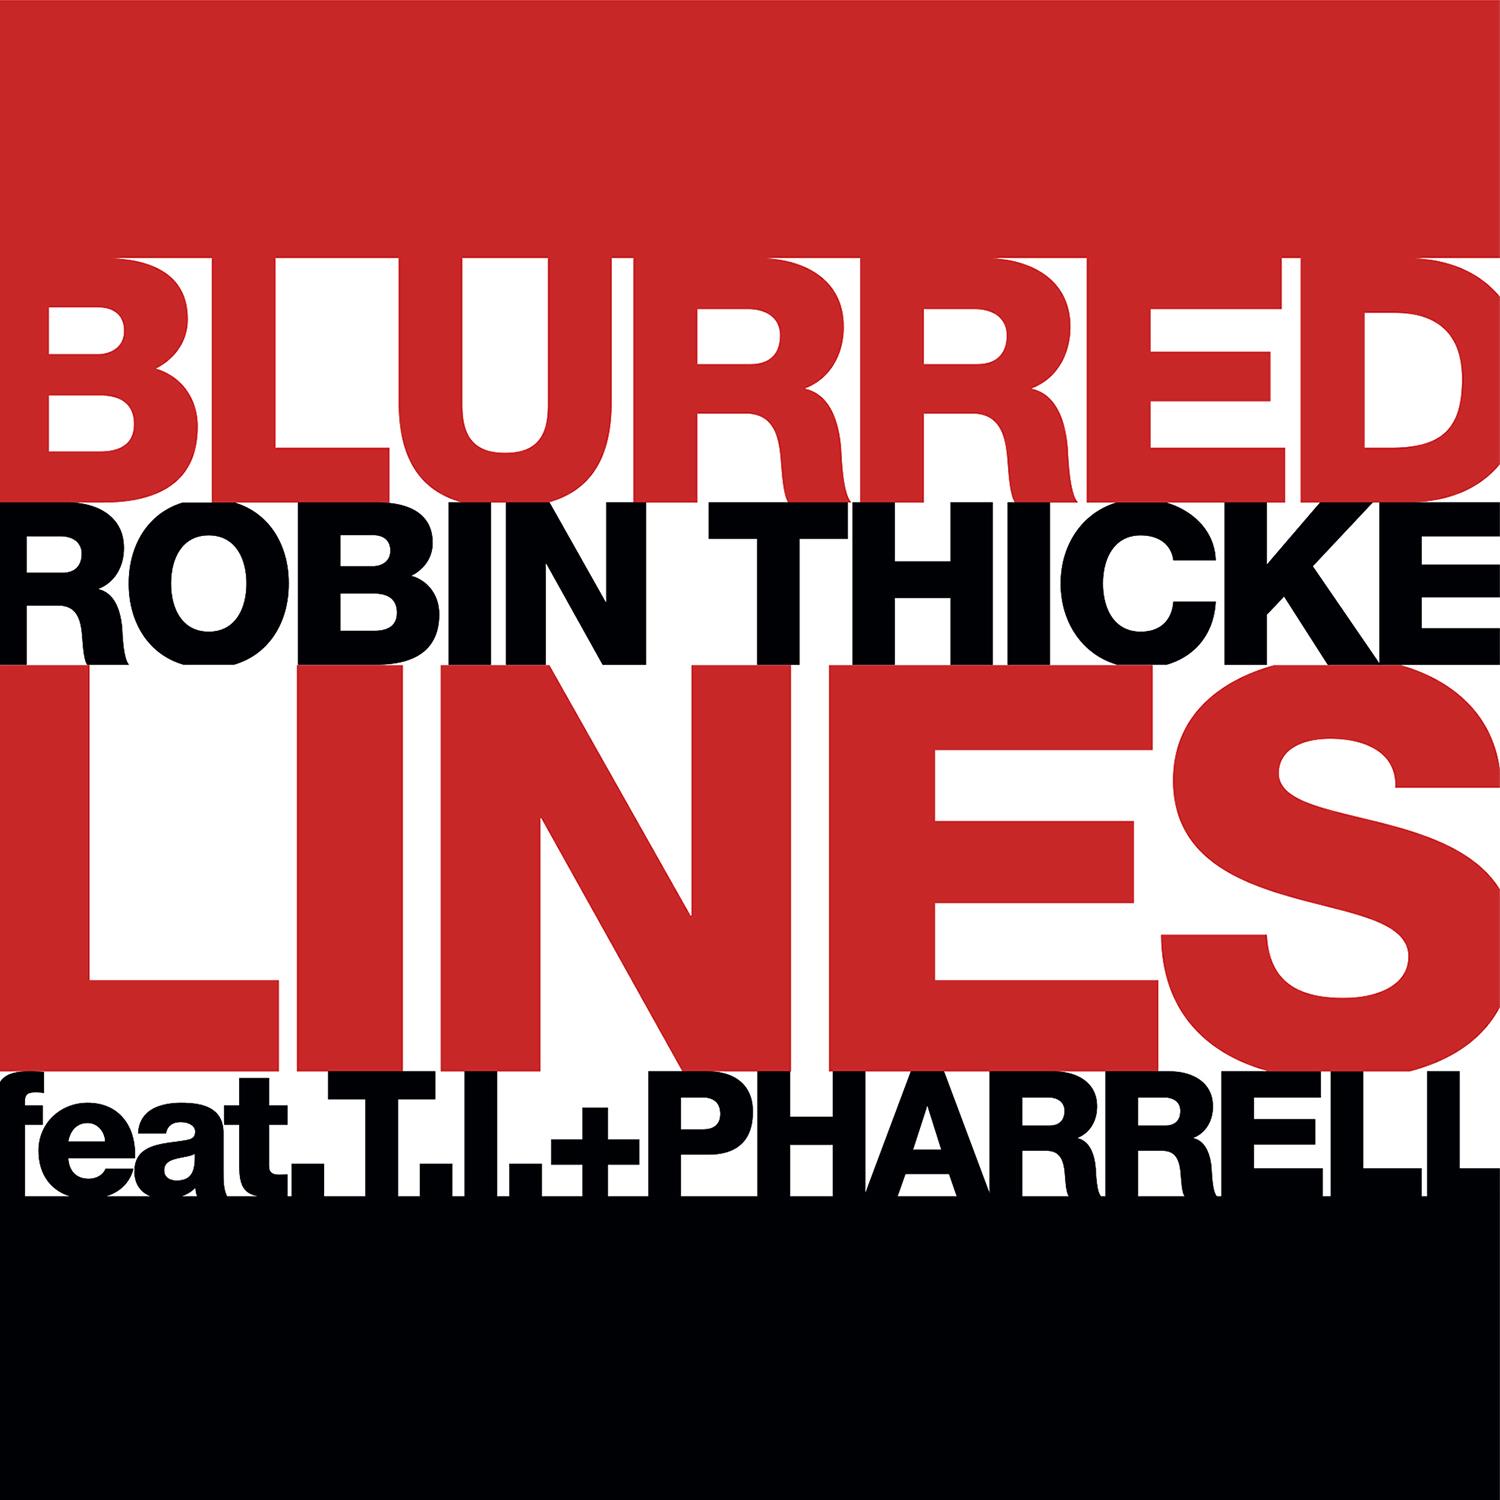 Robin Thicke Ft. T.I. & Pharrell - Blurred Lines